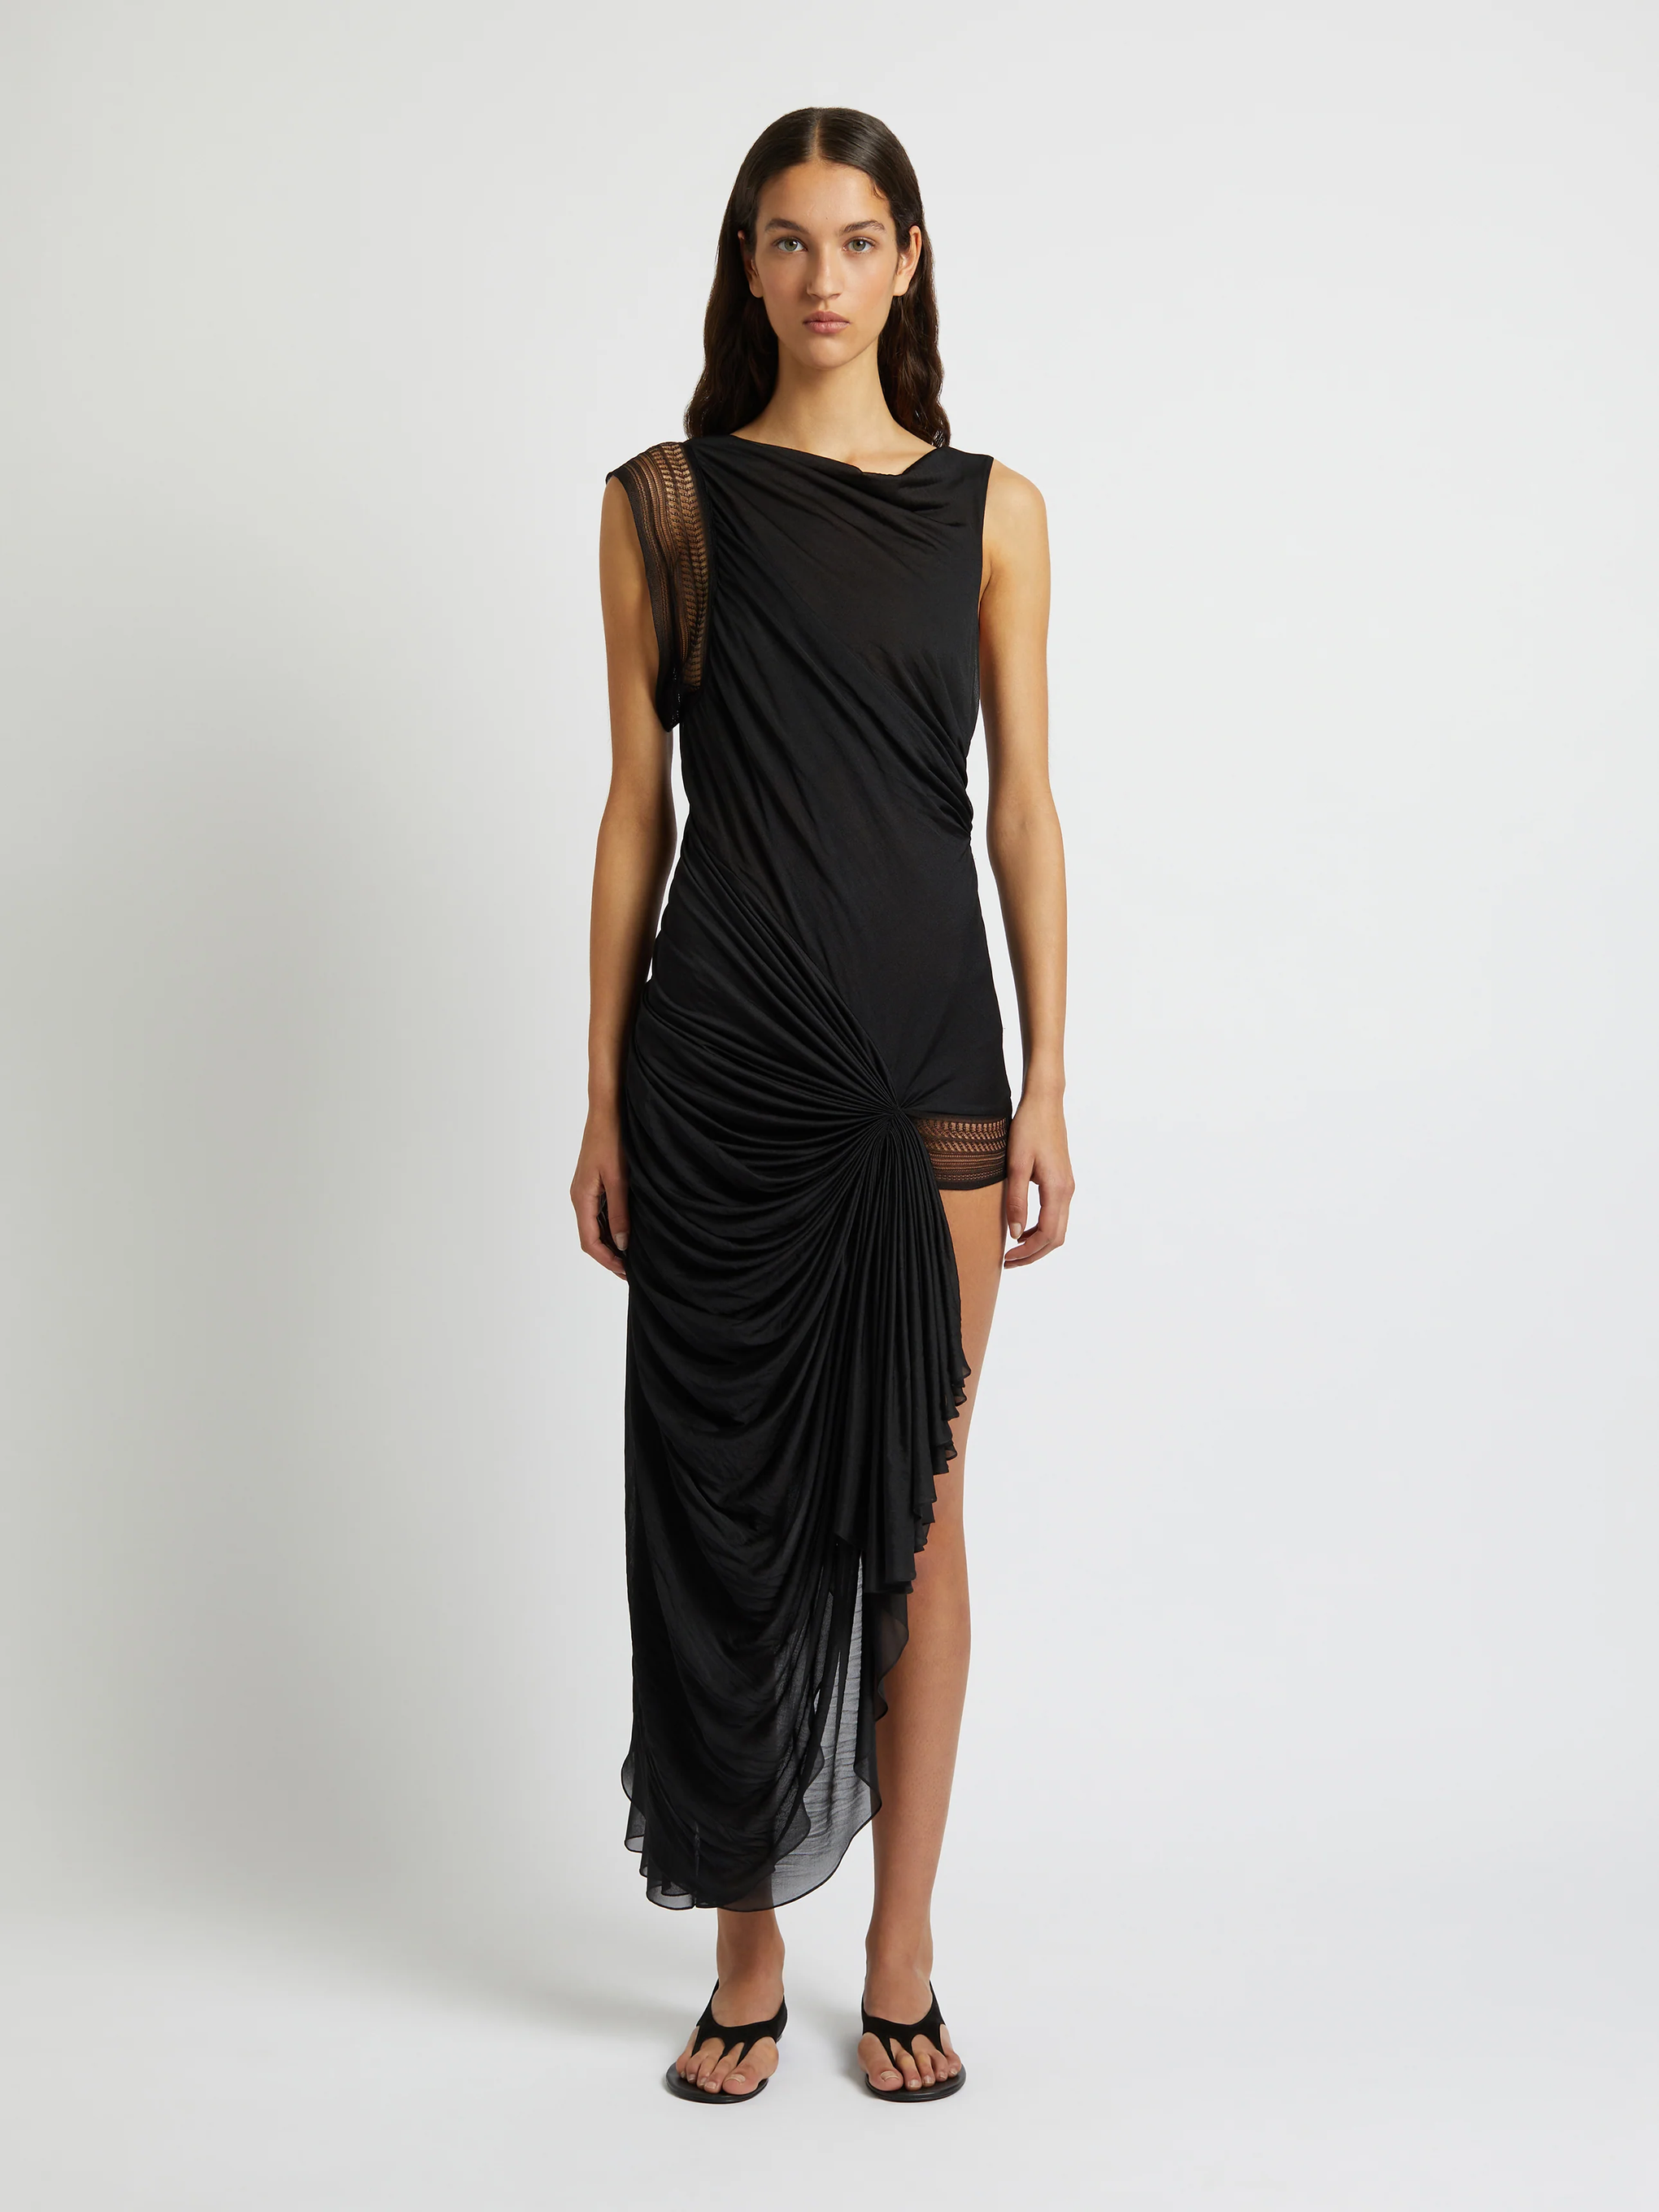 Christopher Esber Galathea Asymmetric long Dress in Black available at The New Trend Australia.